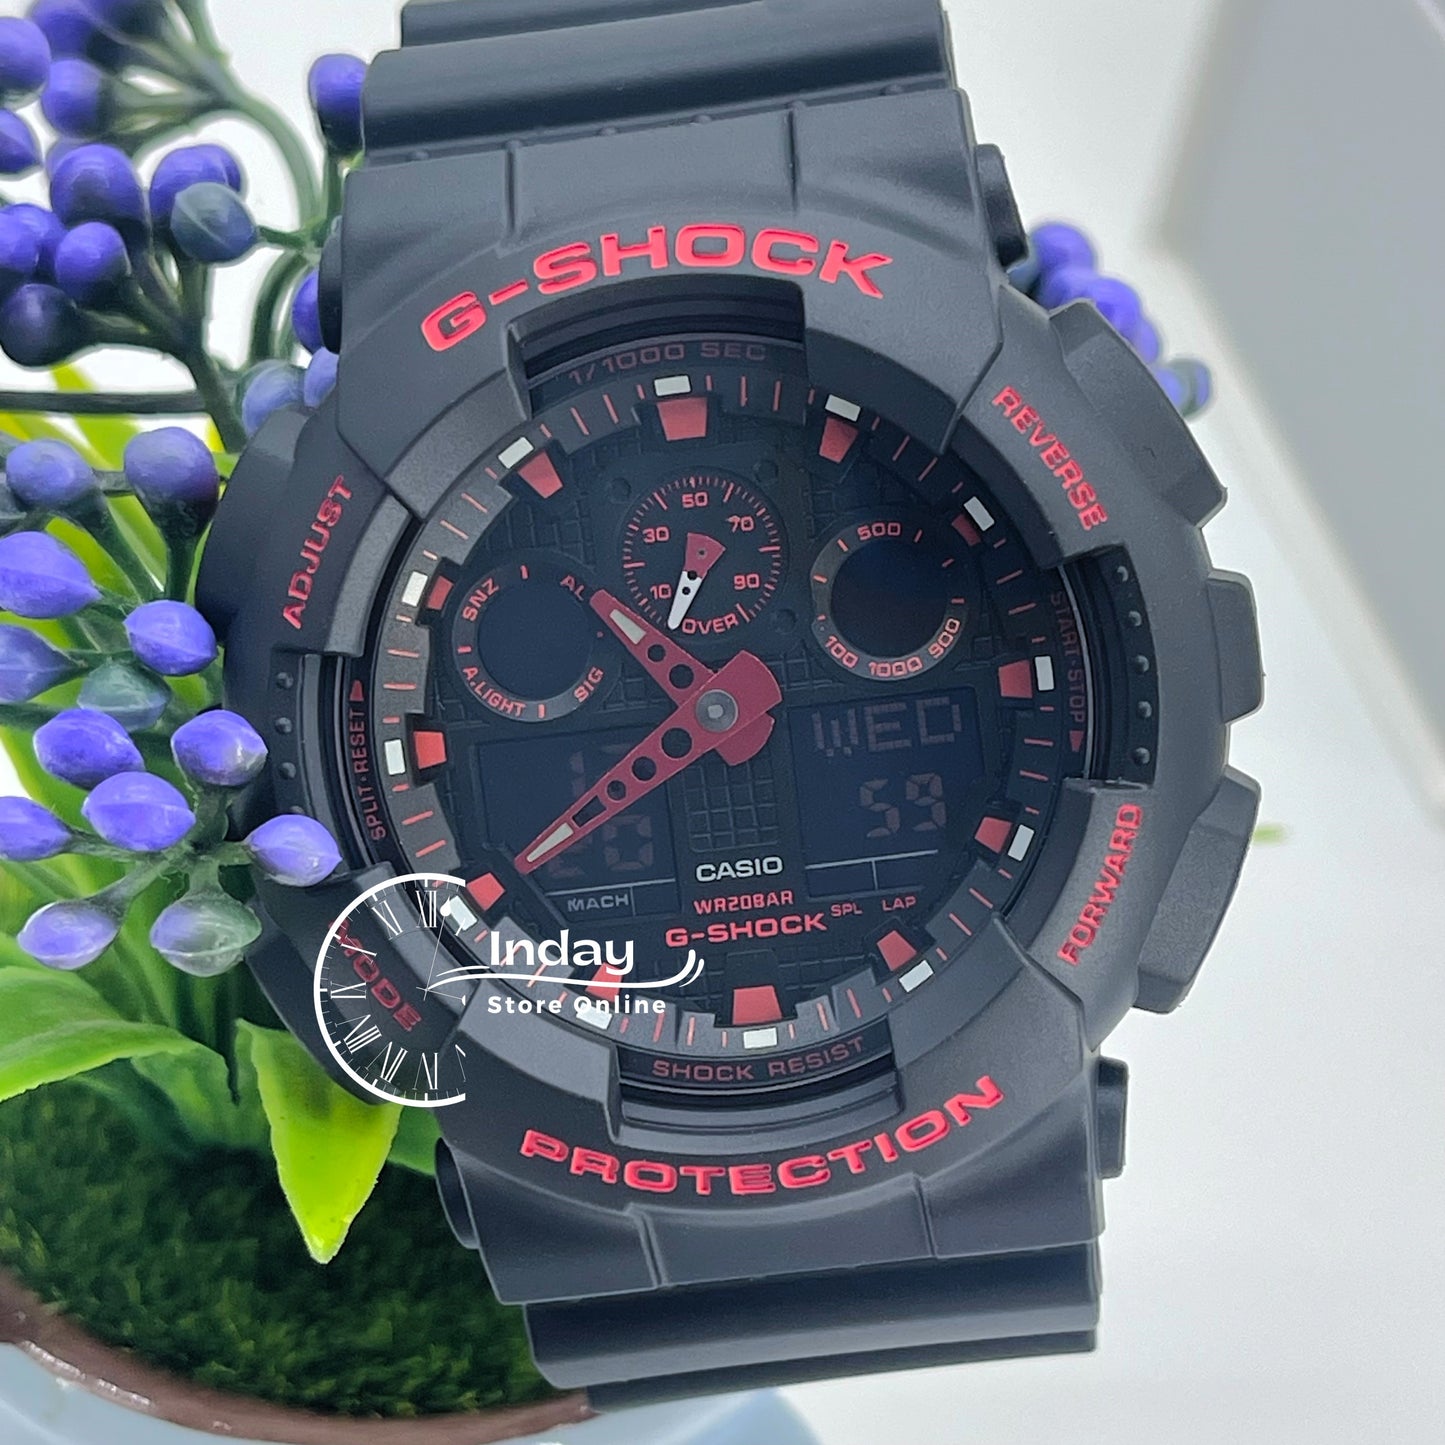 Casio G-Shock Men's Watch GA-100BNR-1A Analog-Digital GA-100 Series Black and Fiery Red Ignite Red Line